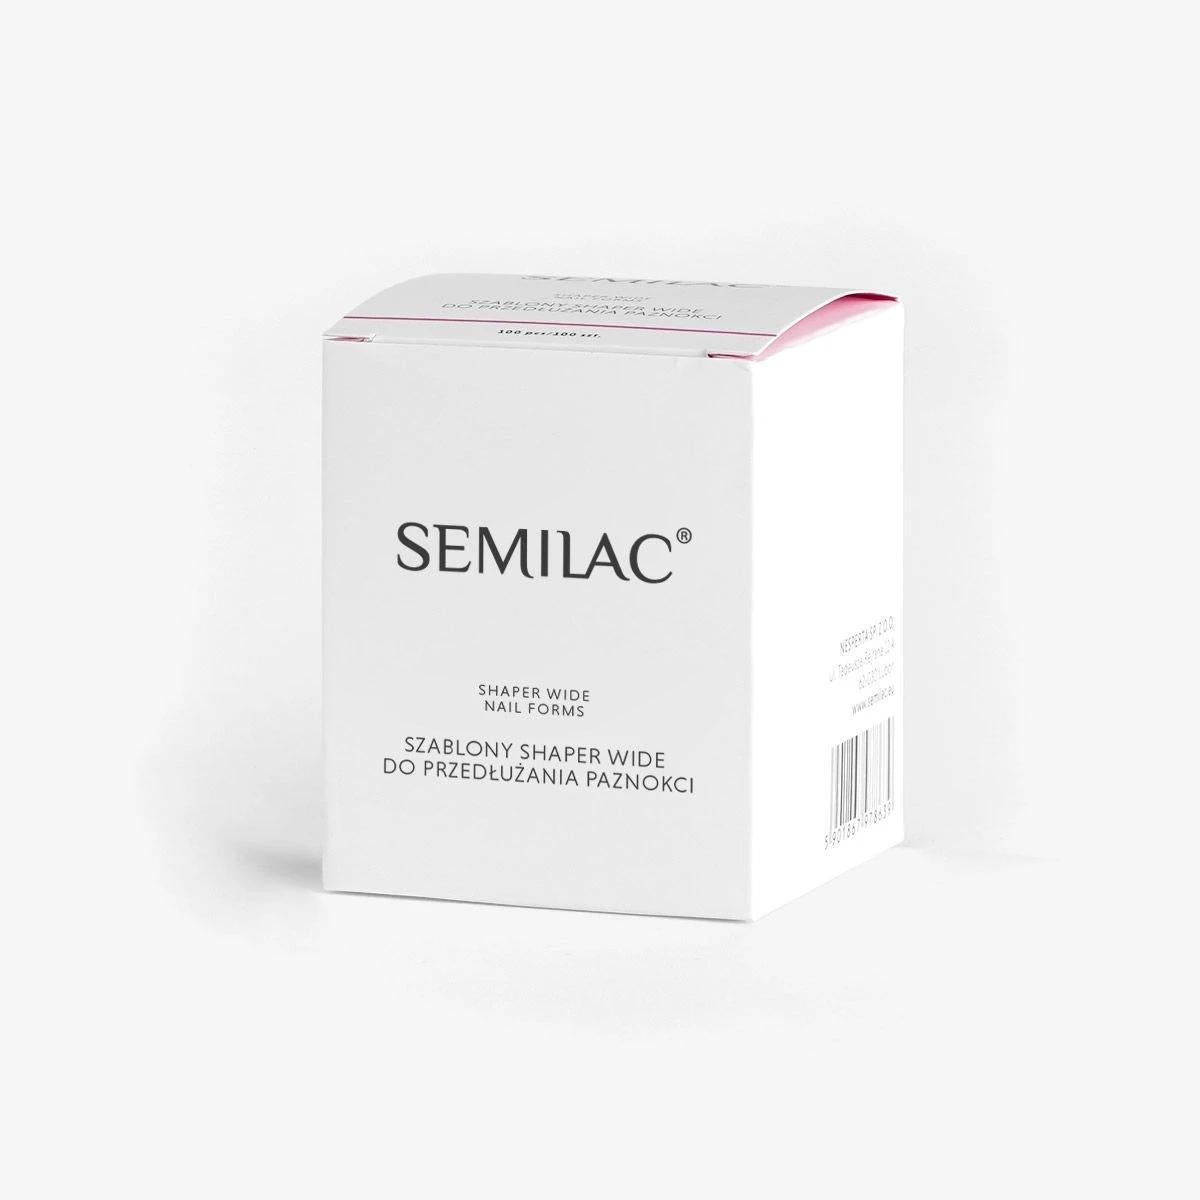 Semilac Shaper Wide Nail Forms 100 psc - Semilac UK